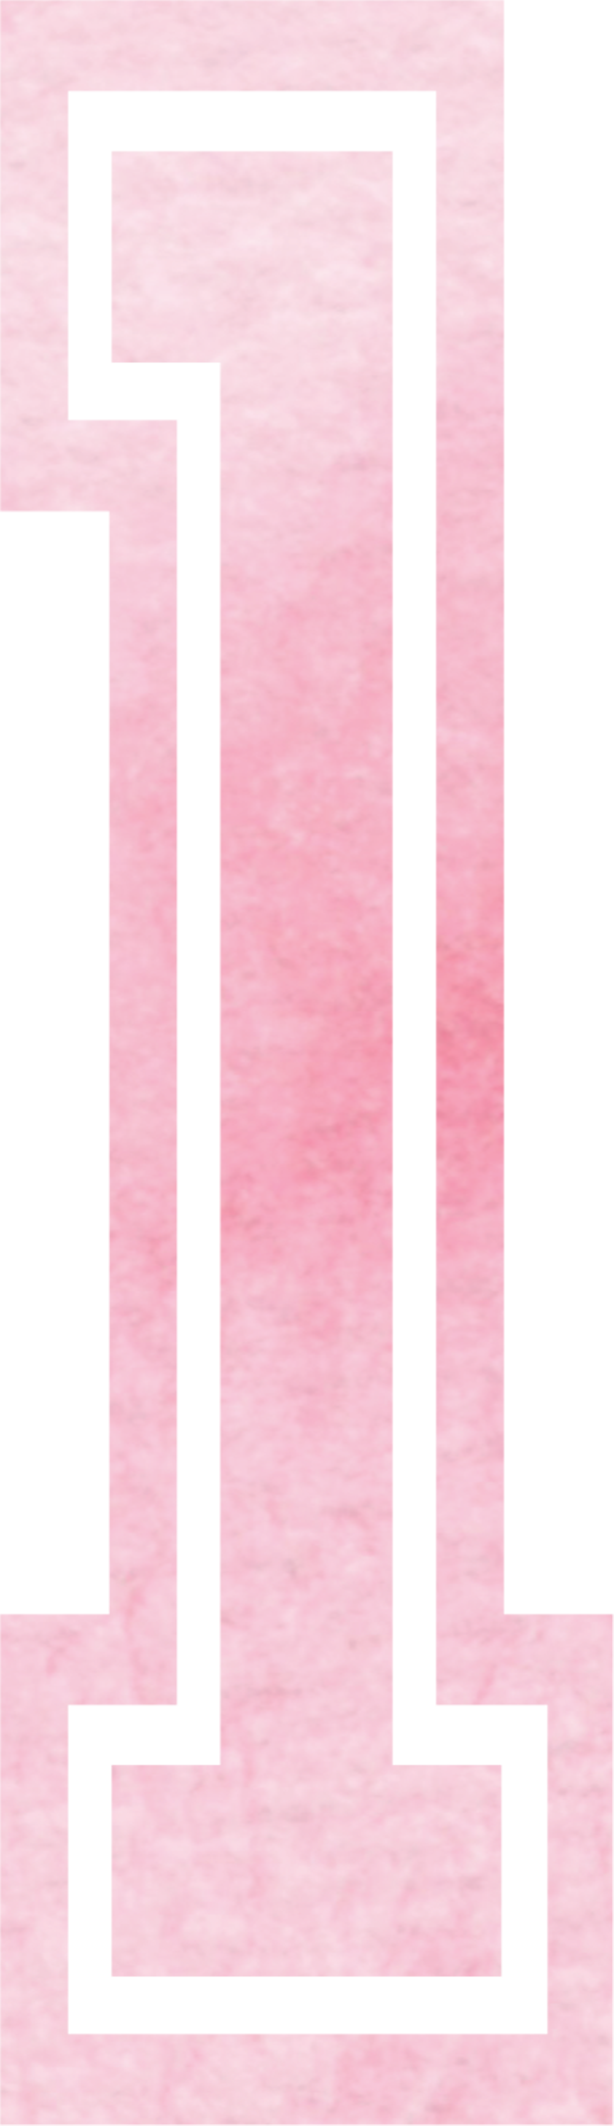 Bügelbild Zahl Aquarell Pink 1